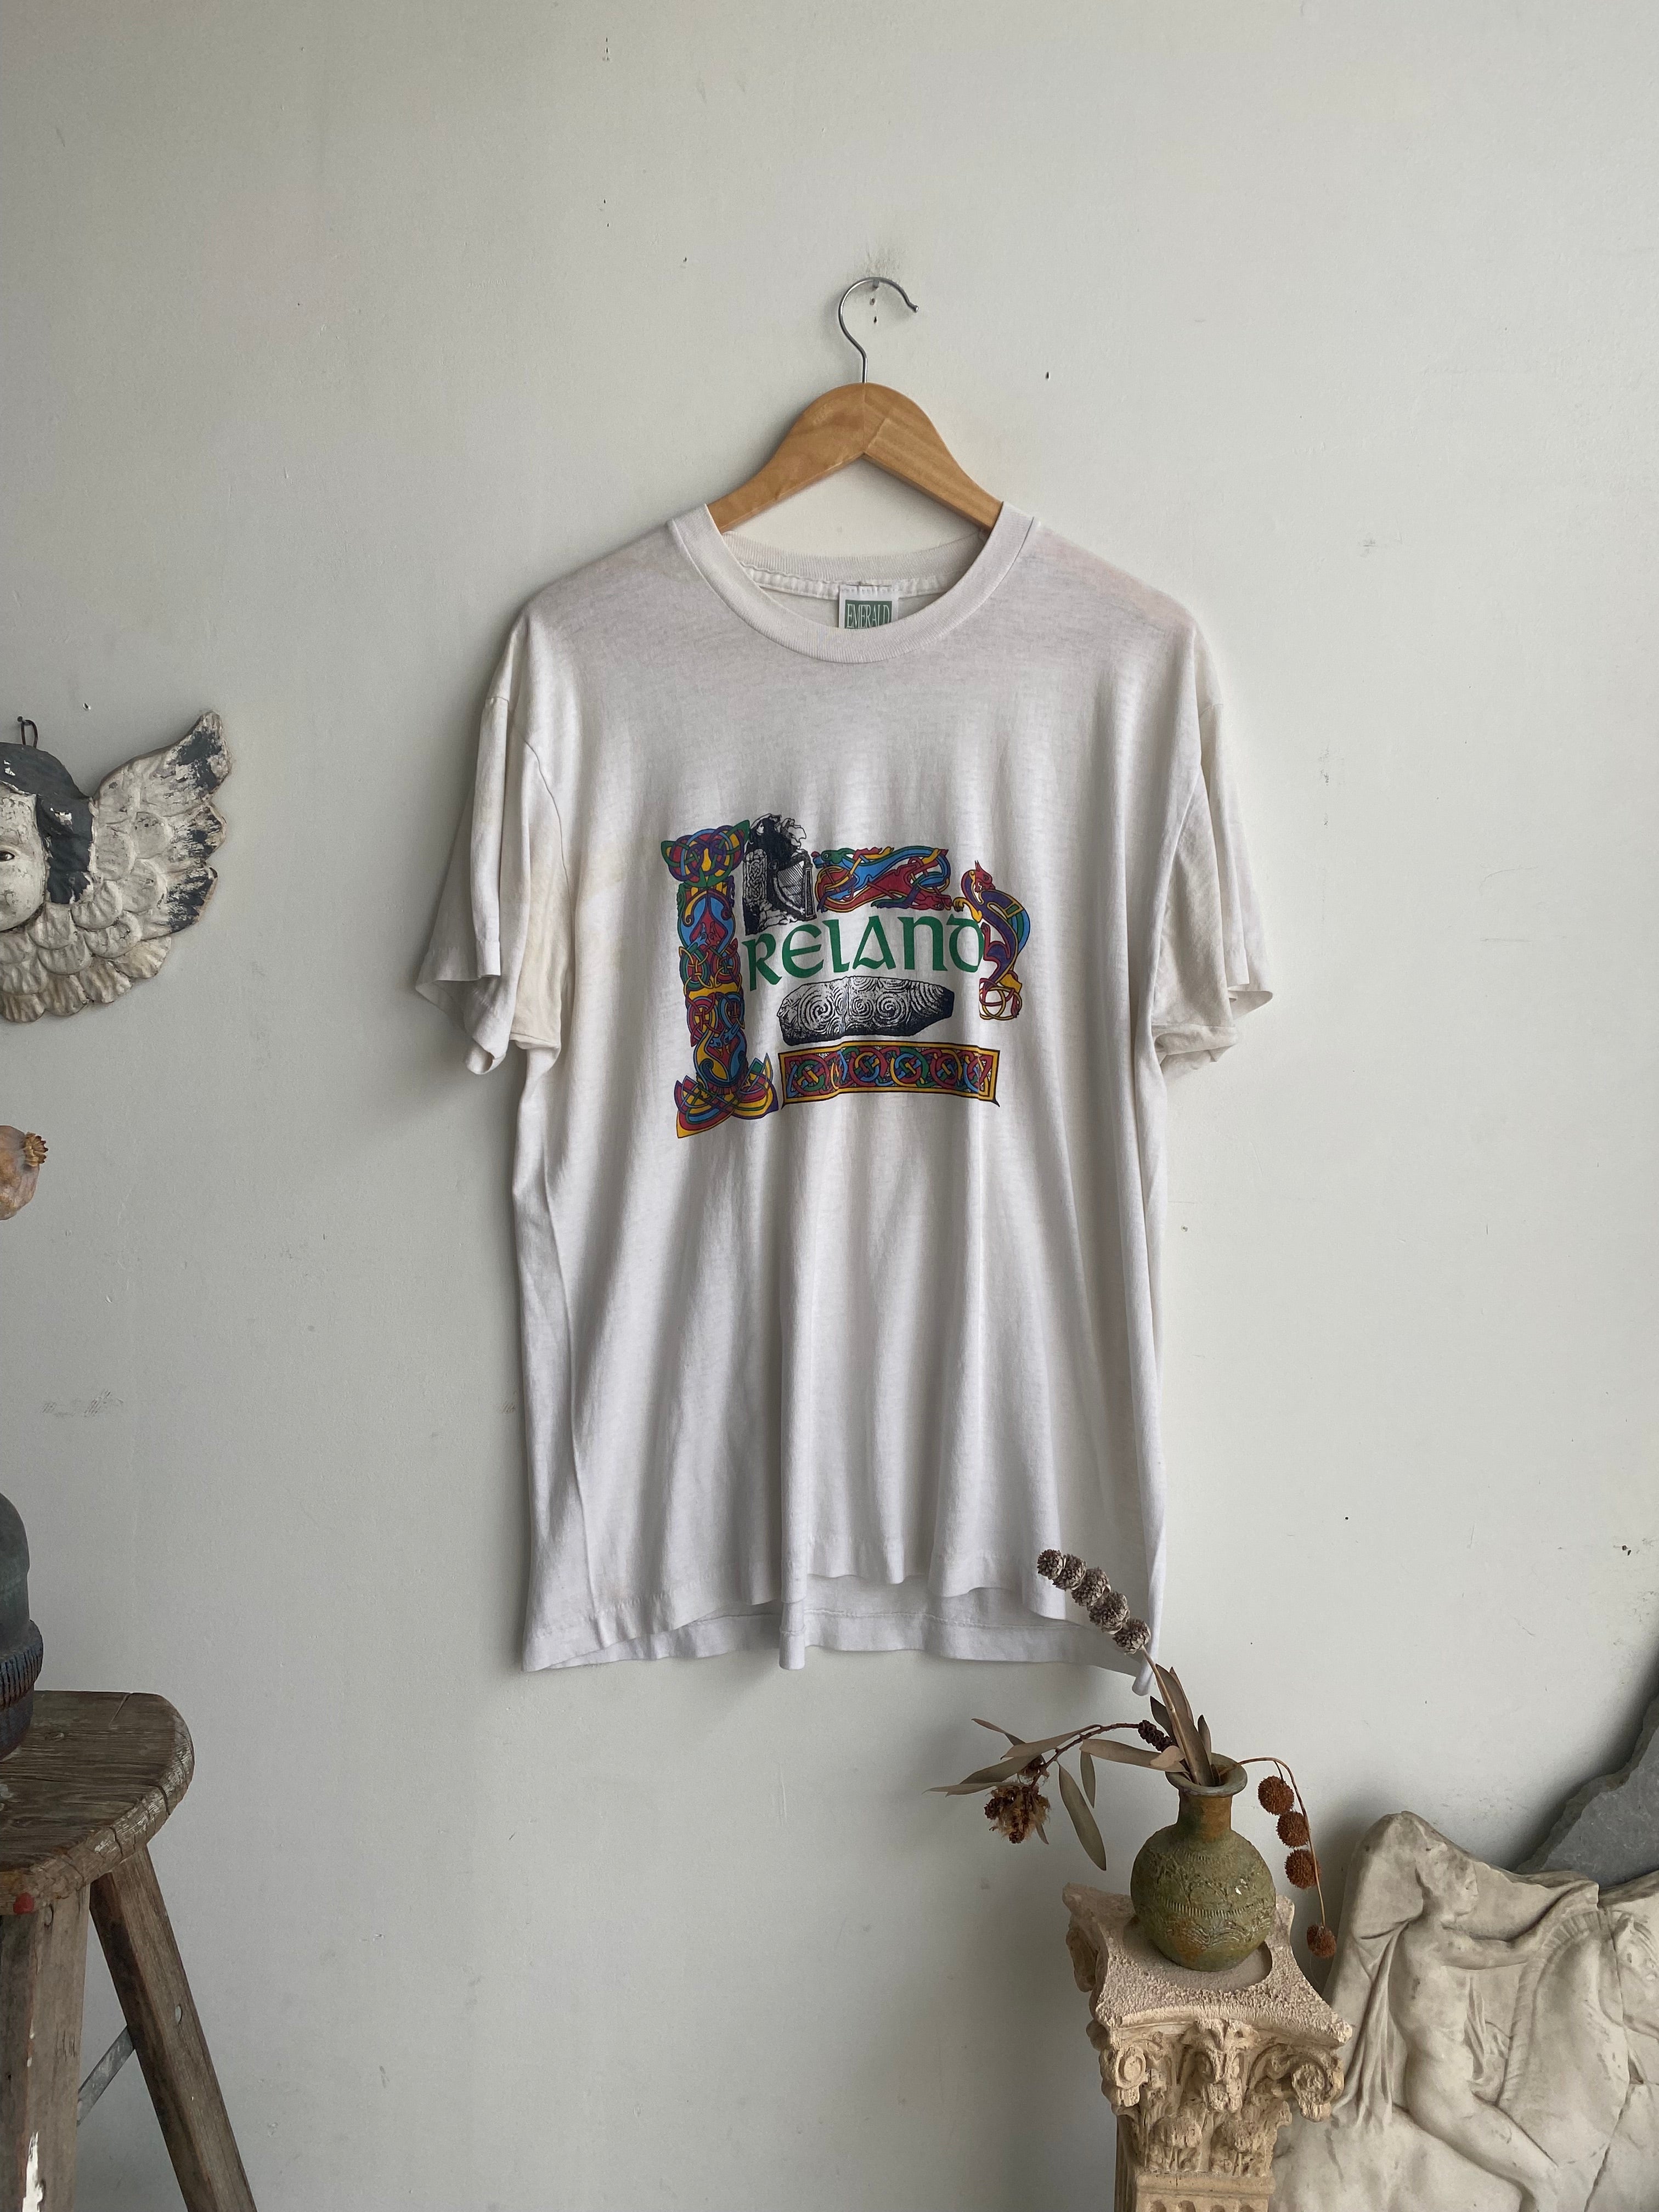 1980s Ireland Calligraphy T-Shirt (XL)